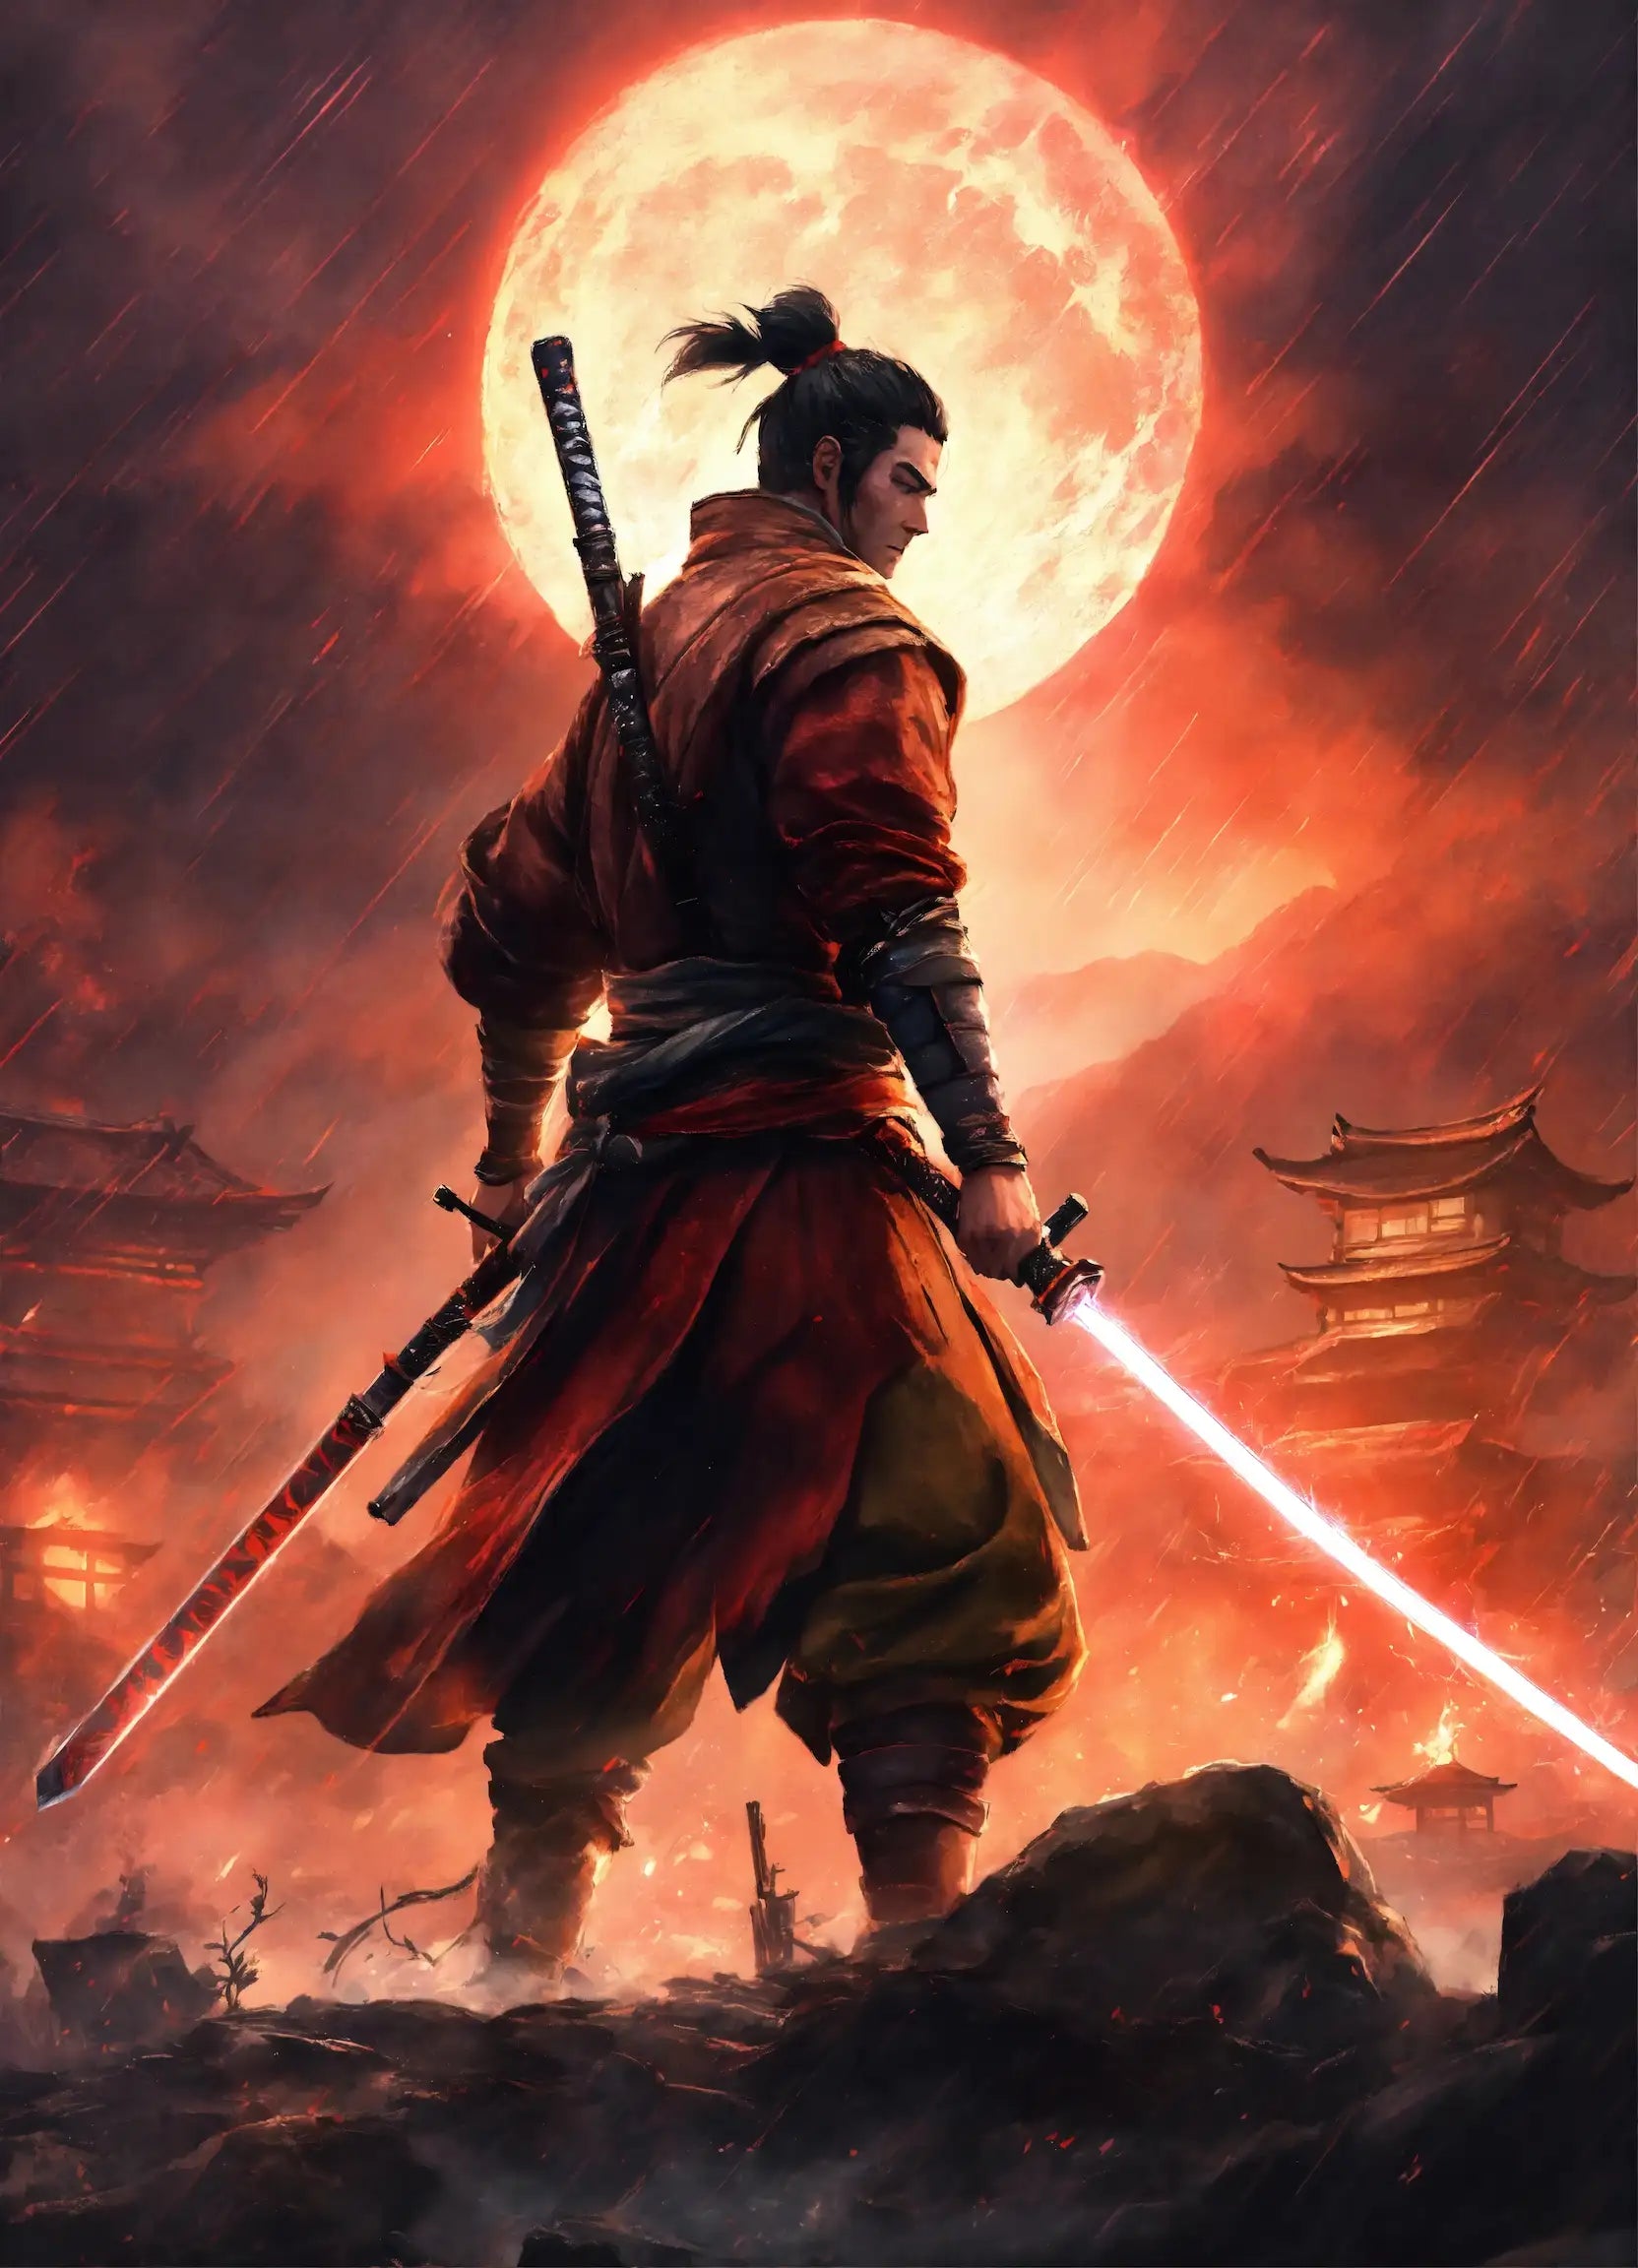 Posters that capture the essence of legendary samurai warriors.